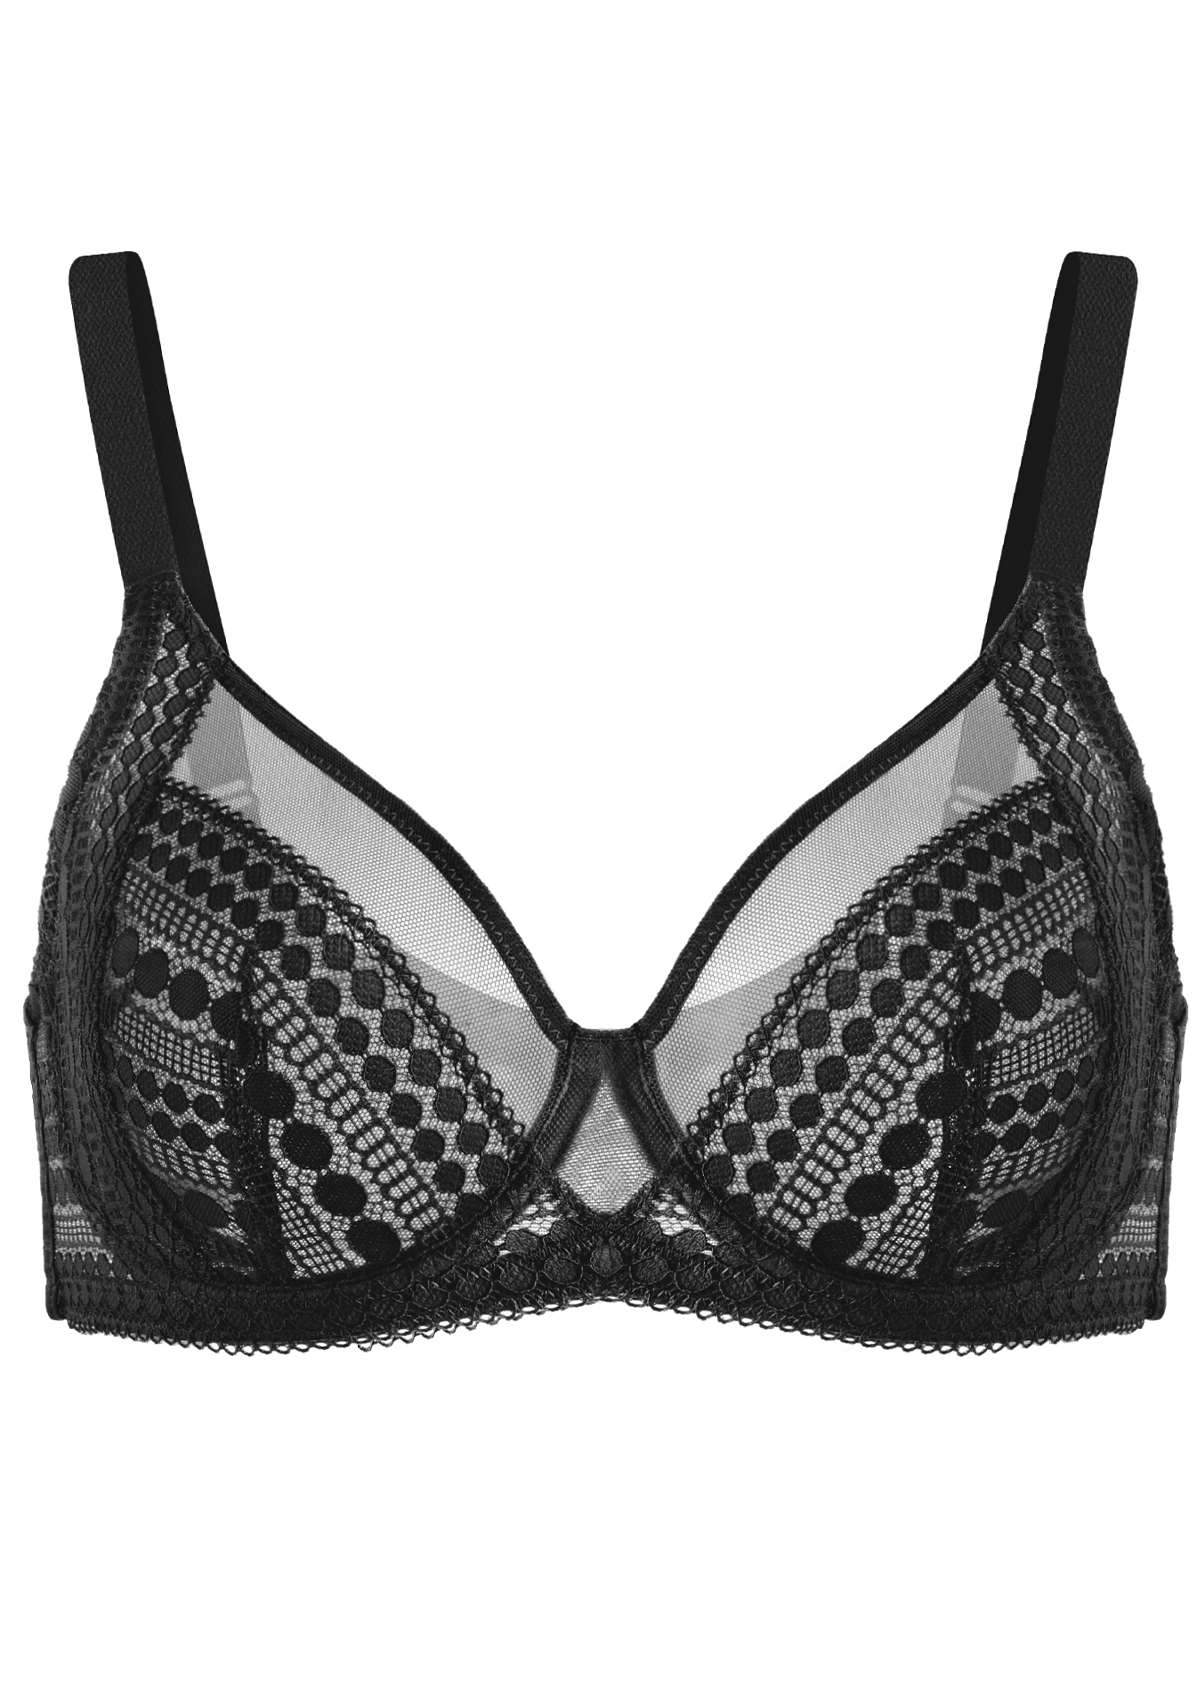 HSIA Heroine Matching Bra And Panties: Unlined Lace Unpadded Bra - Black / 36 / DD/E